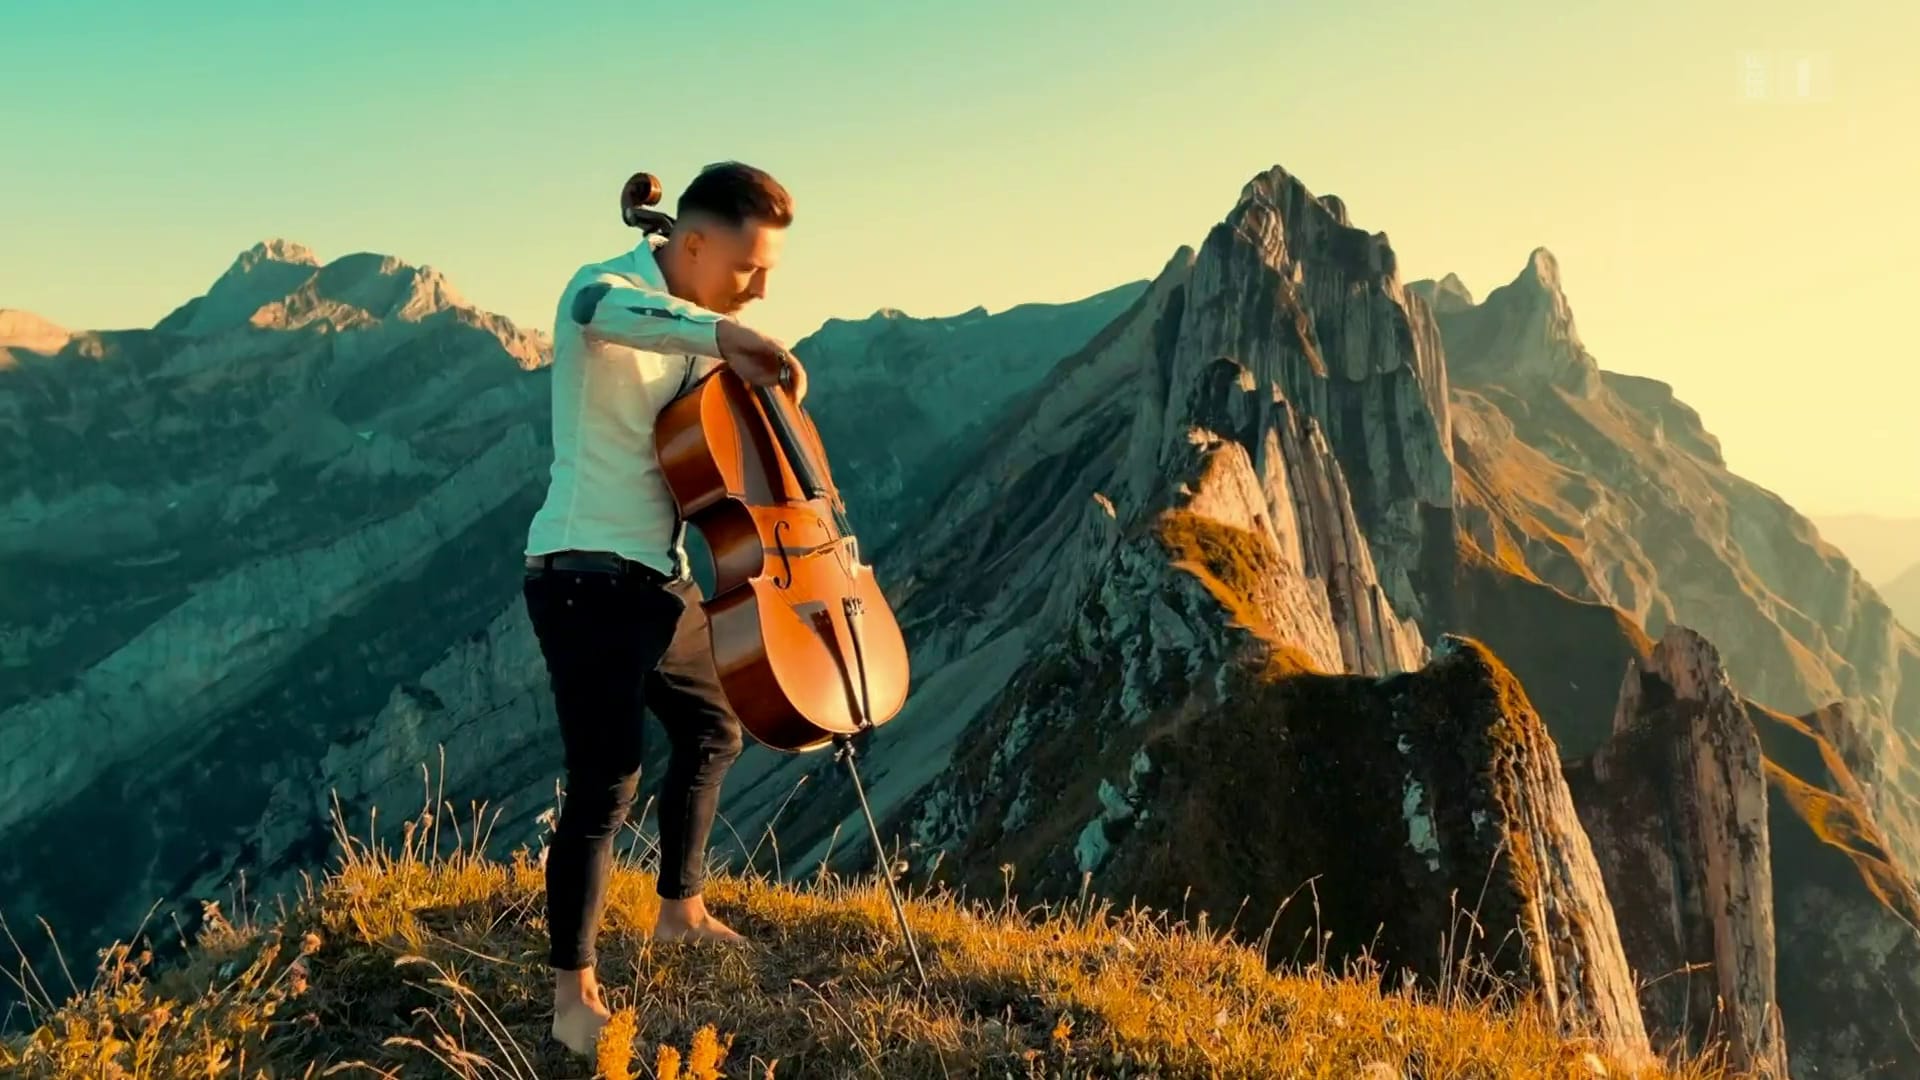 Junger Mann spielt bei sonnenuntergang in den Bergen Cello